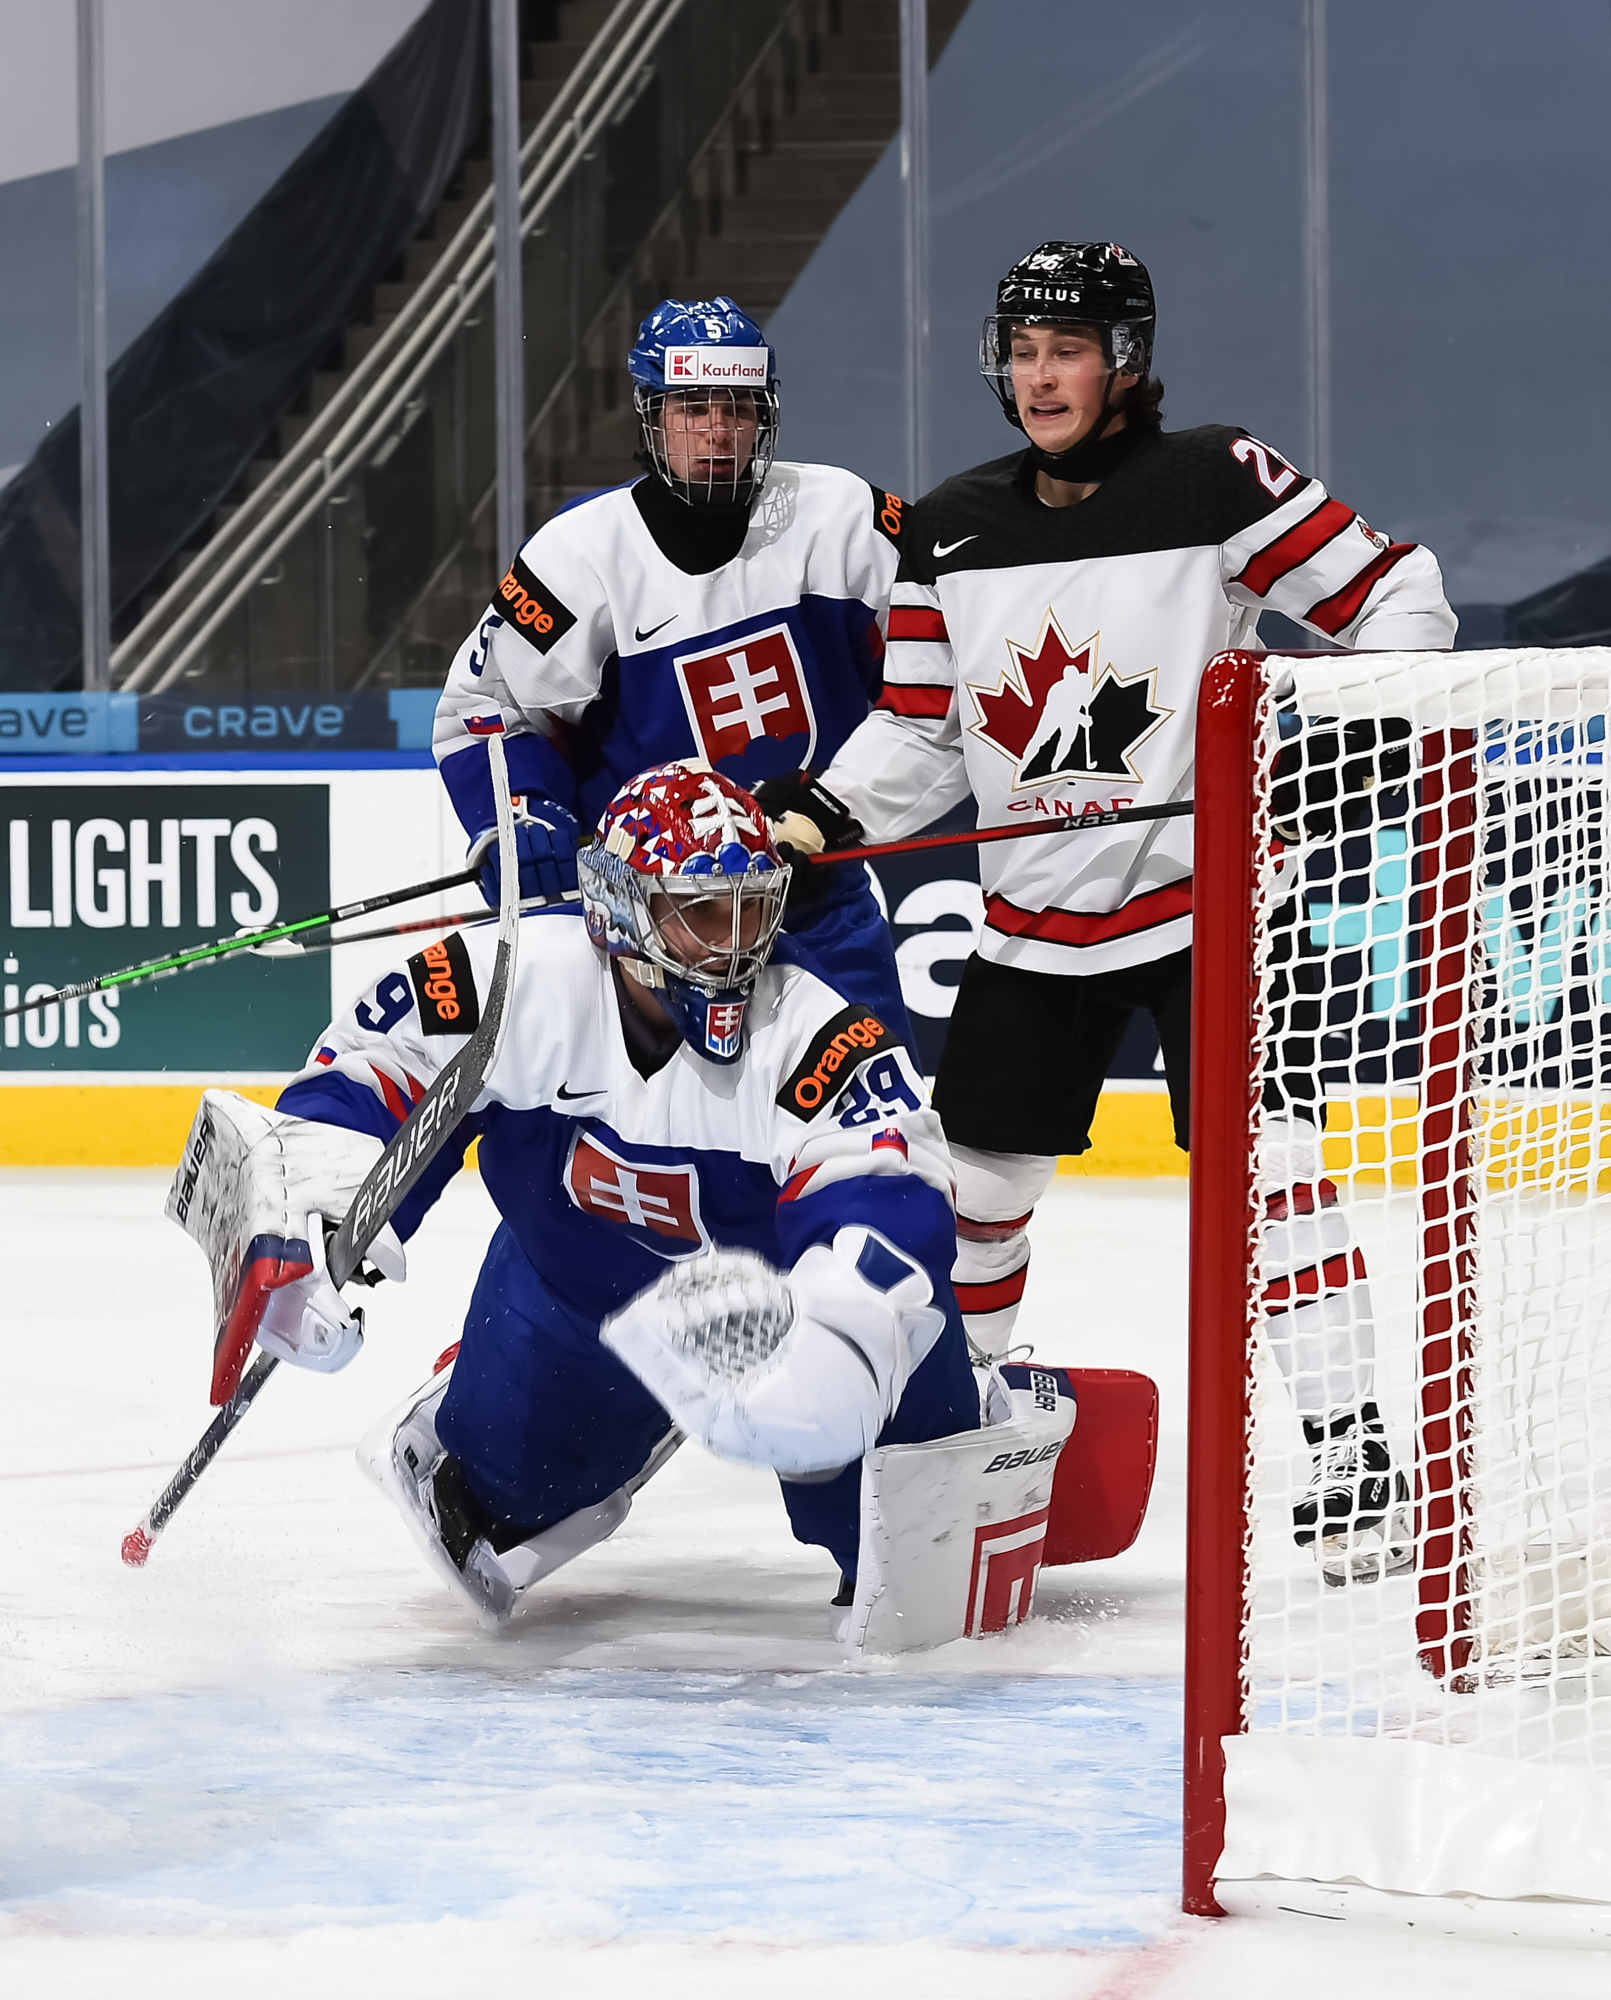 IIHF - Gallery: Slovakia vs Canada - 2021 IIHF World Junior Championship